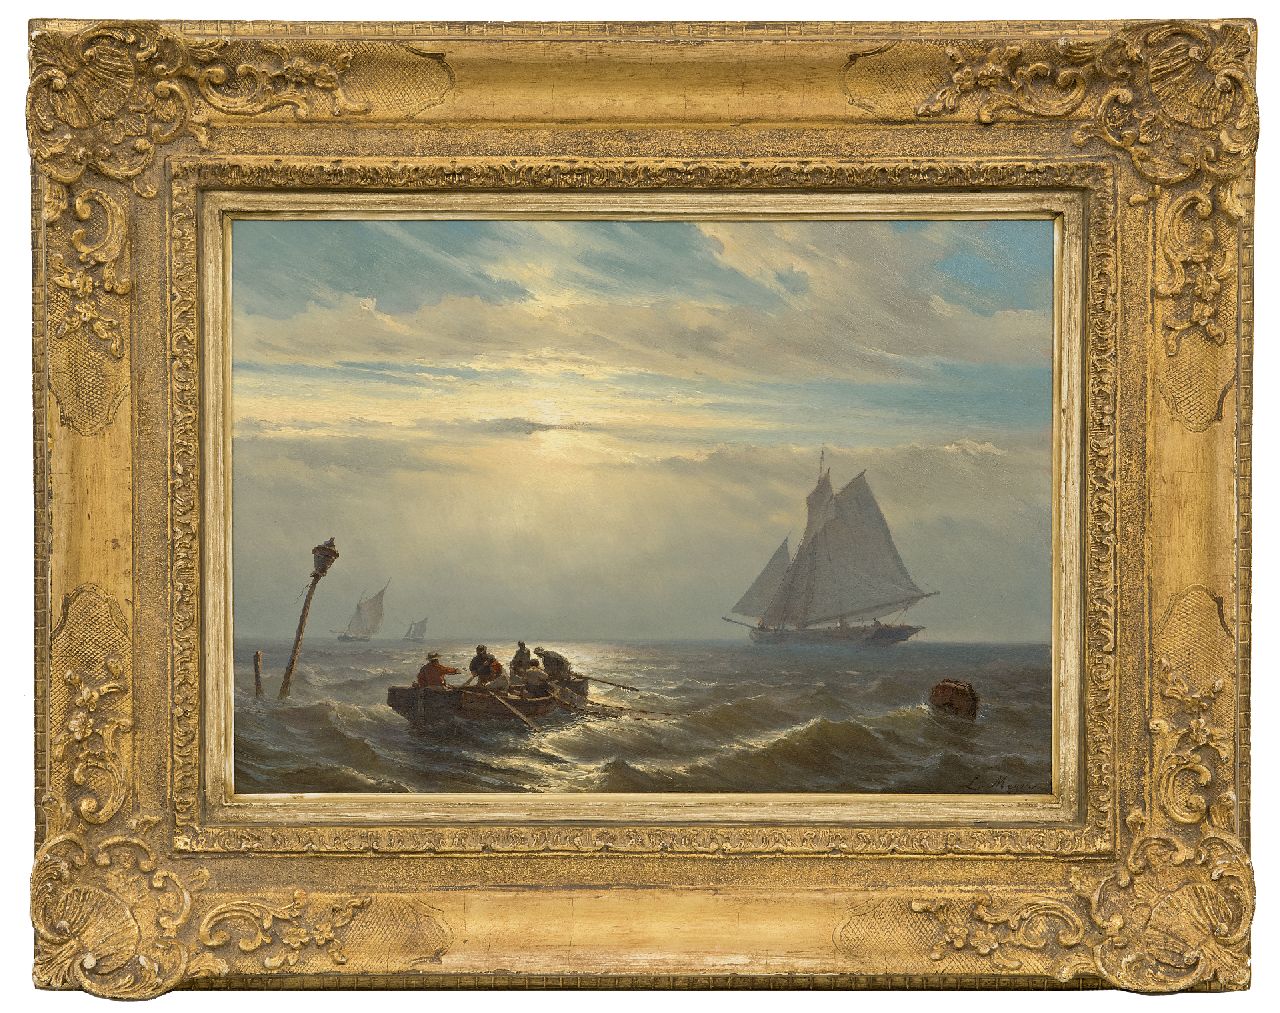 Meijer J.H.L.  | Johan Hendrik 'Louis' Meijer | Paintings offered for sale | Vessels in open sea at sunset, oil on panel 30.7 x 42.1 cm, signed l.r.